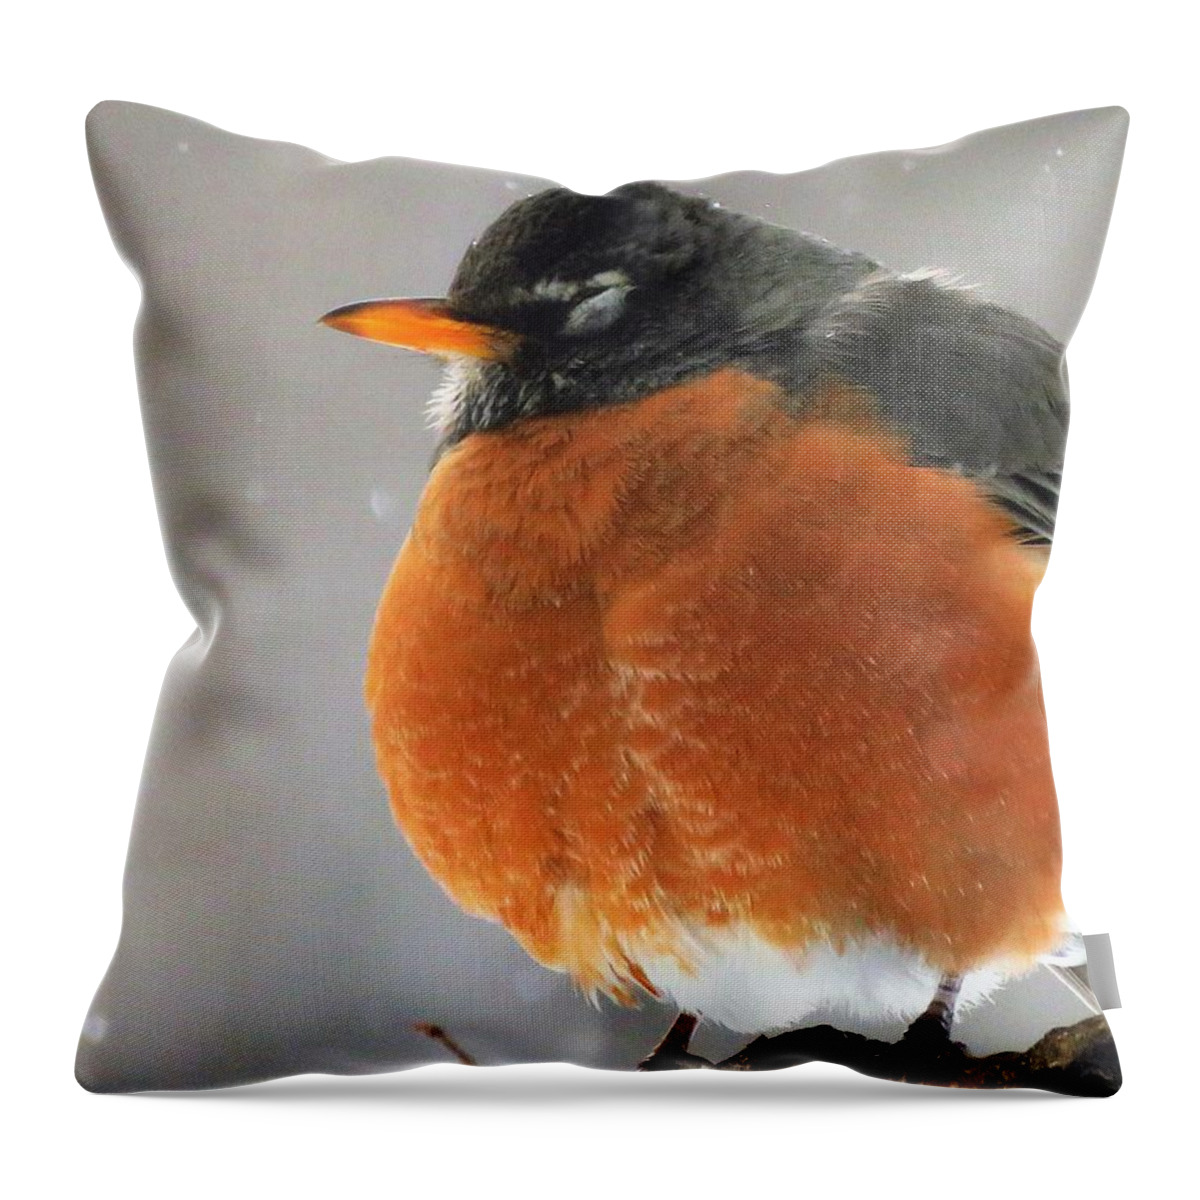 Birds Throw Pillow featuring the photograph Round Robin by Lori Frisch